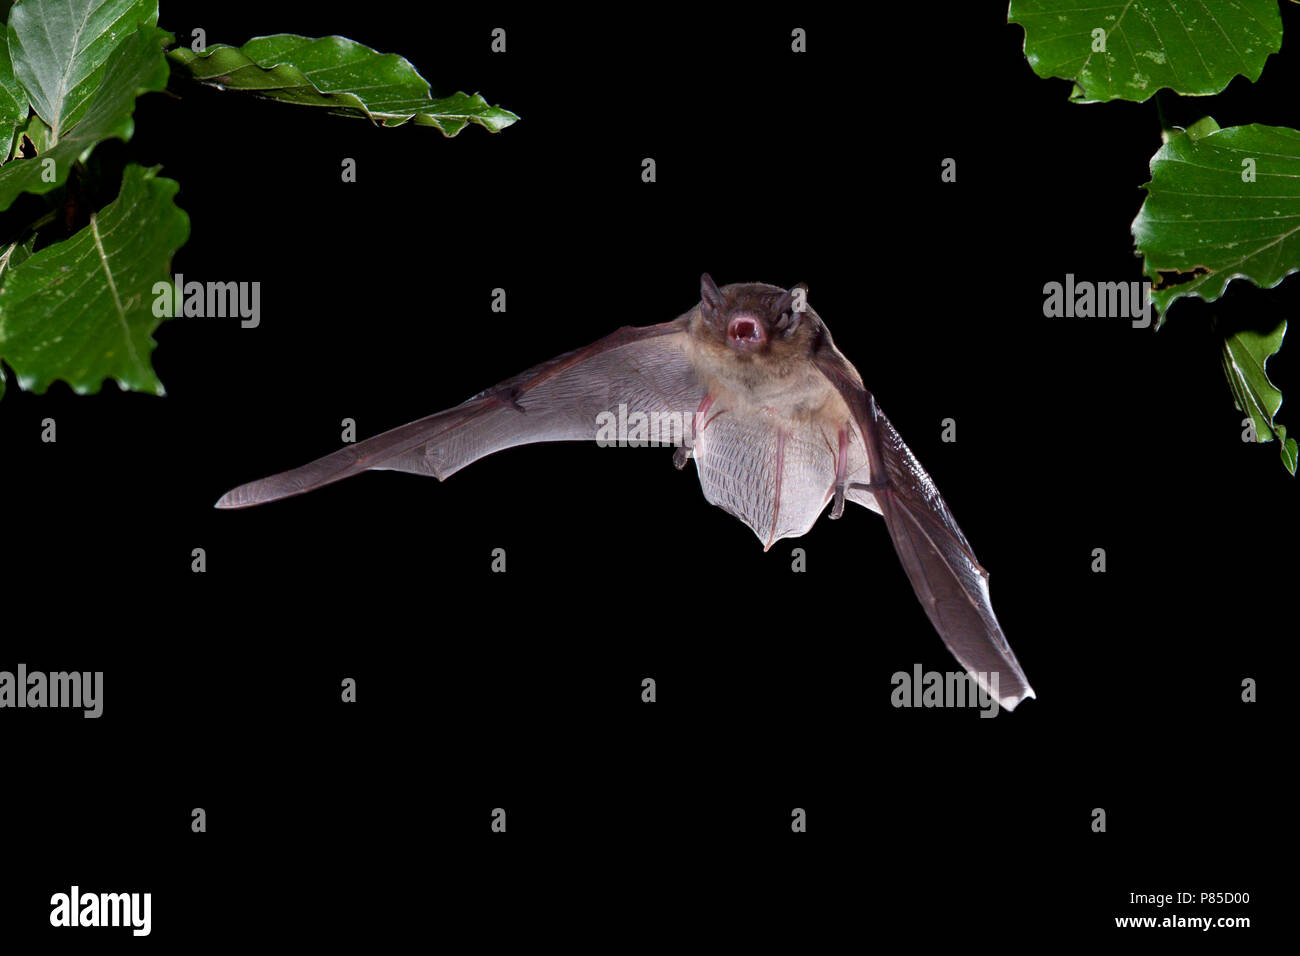 Ruige dwergvleermuis vliegend, Nathusius' pipistrelle flying, Stock Photo